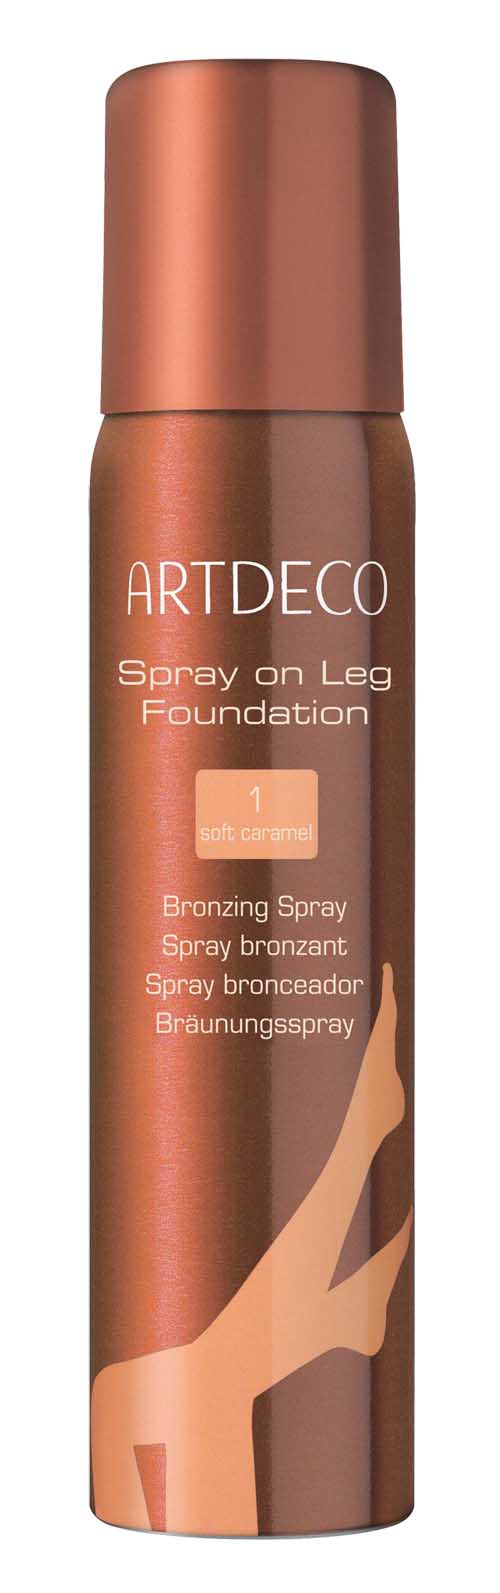 Artdeco spray on leg foundation soft caramel